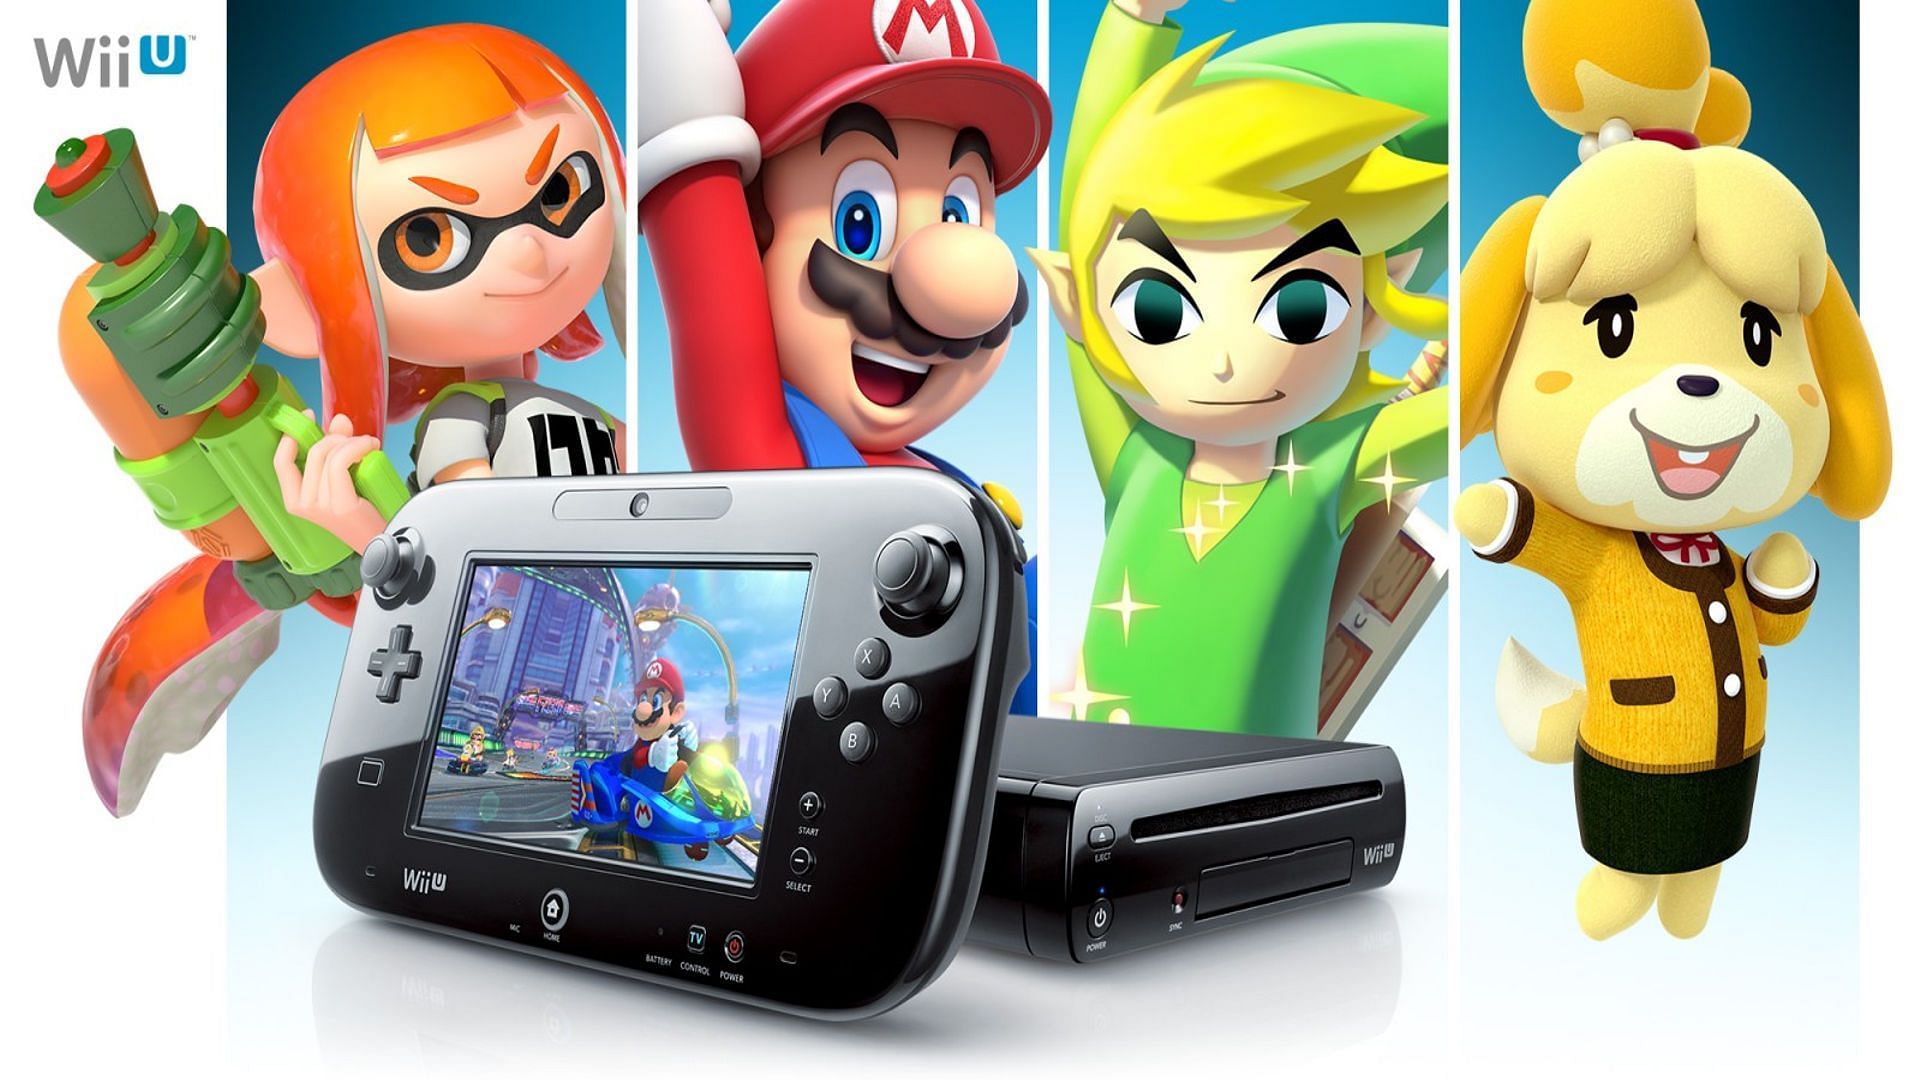 Nintendo Wii U promotional image